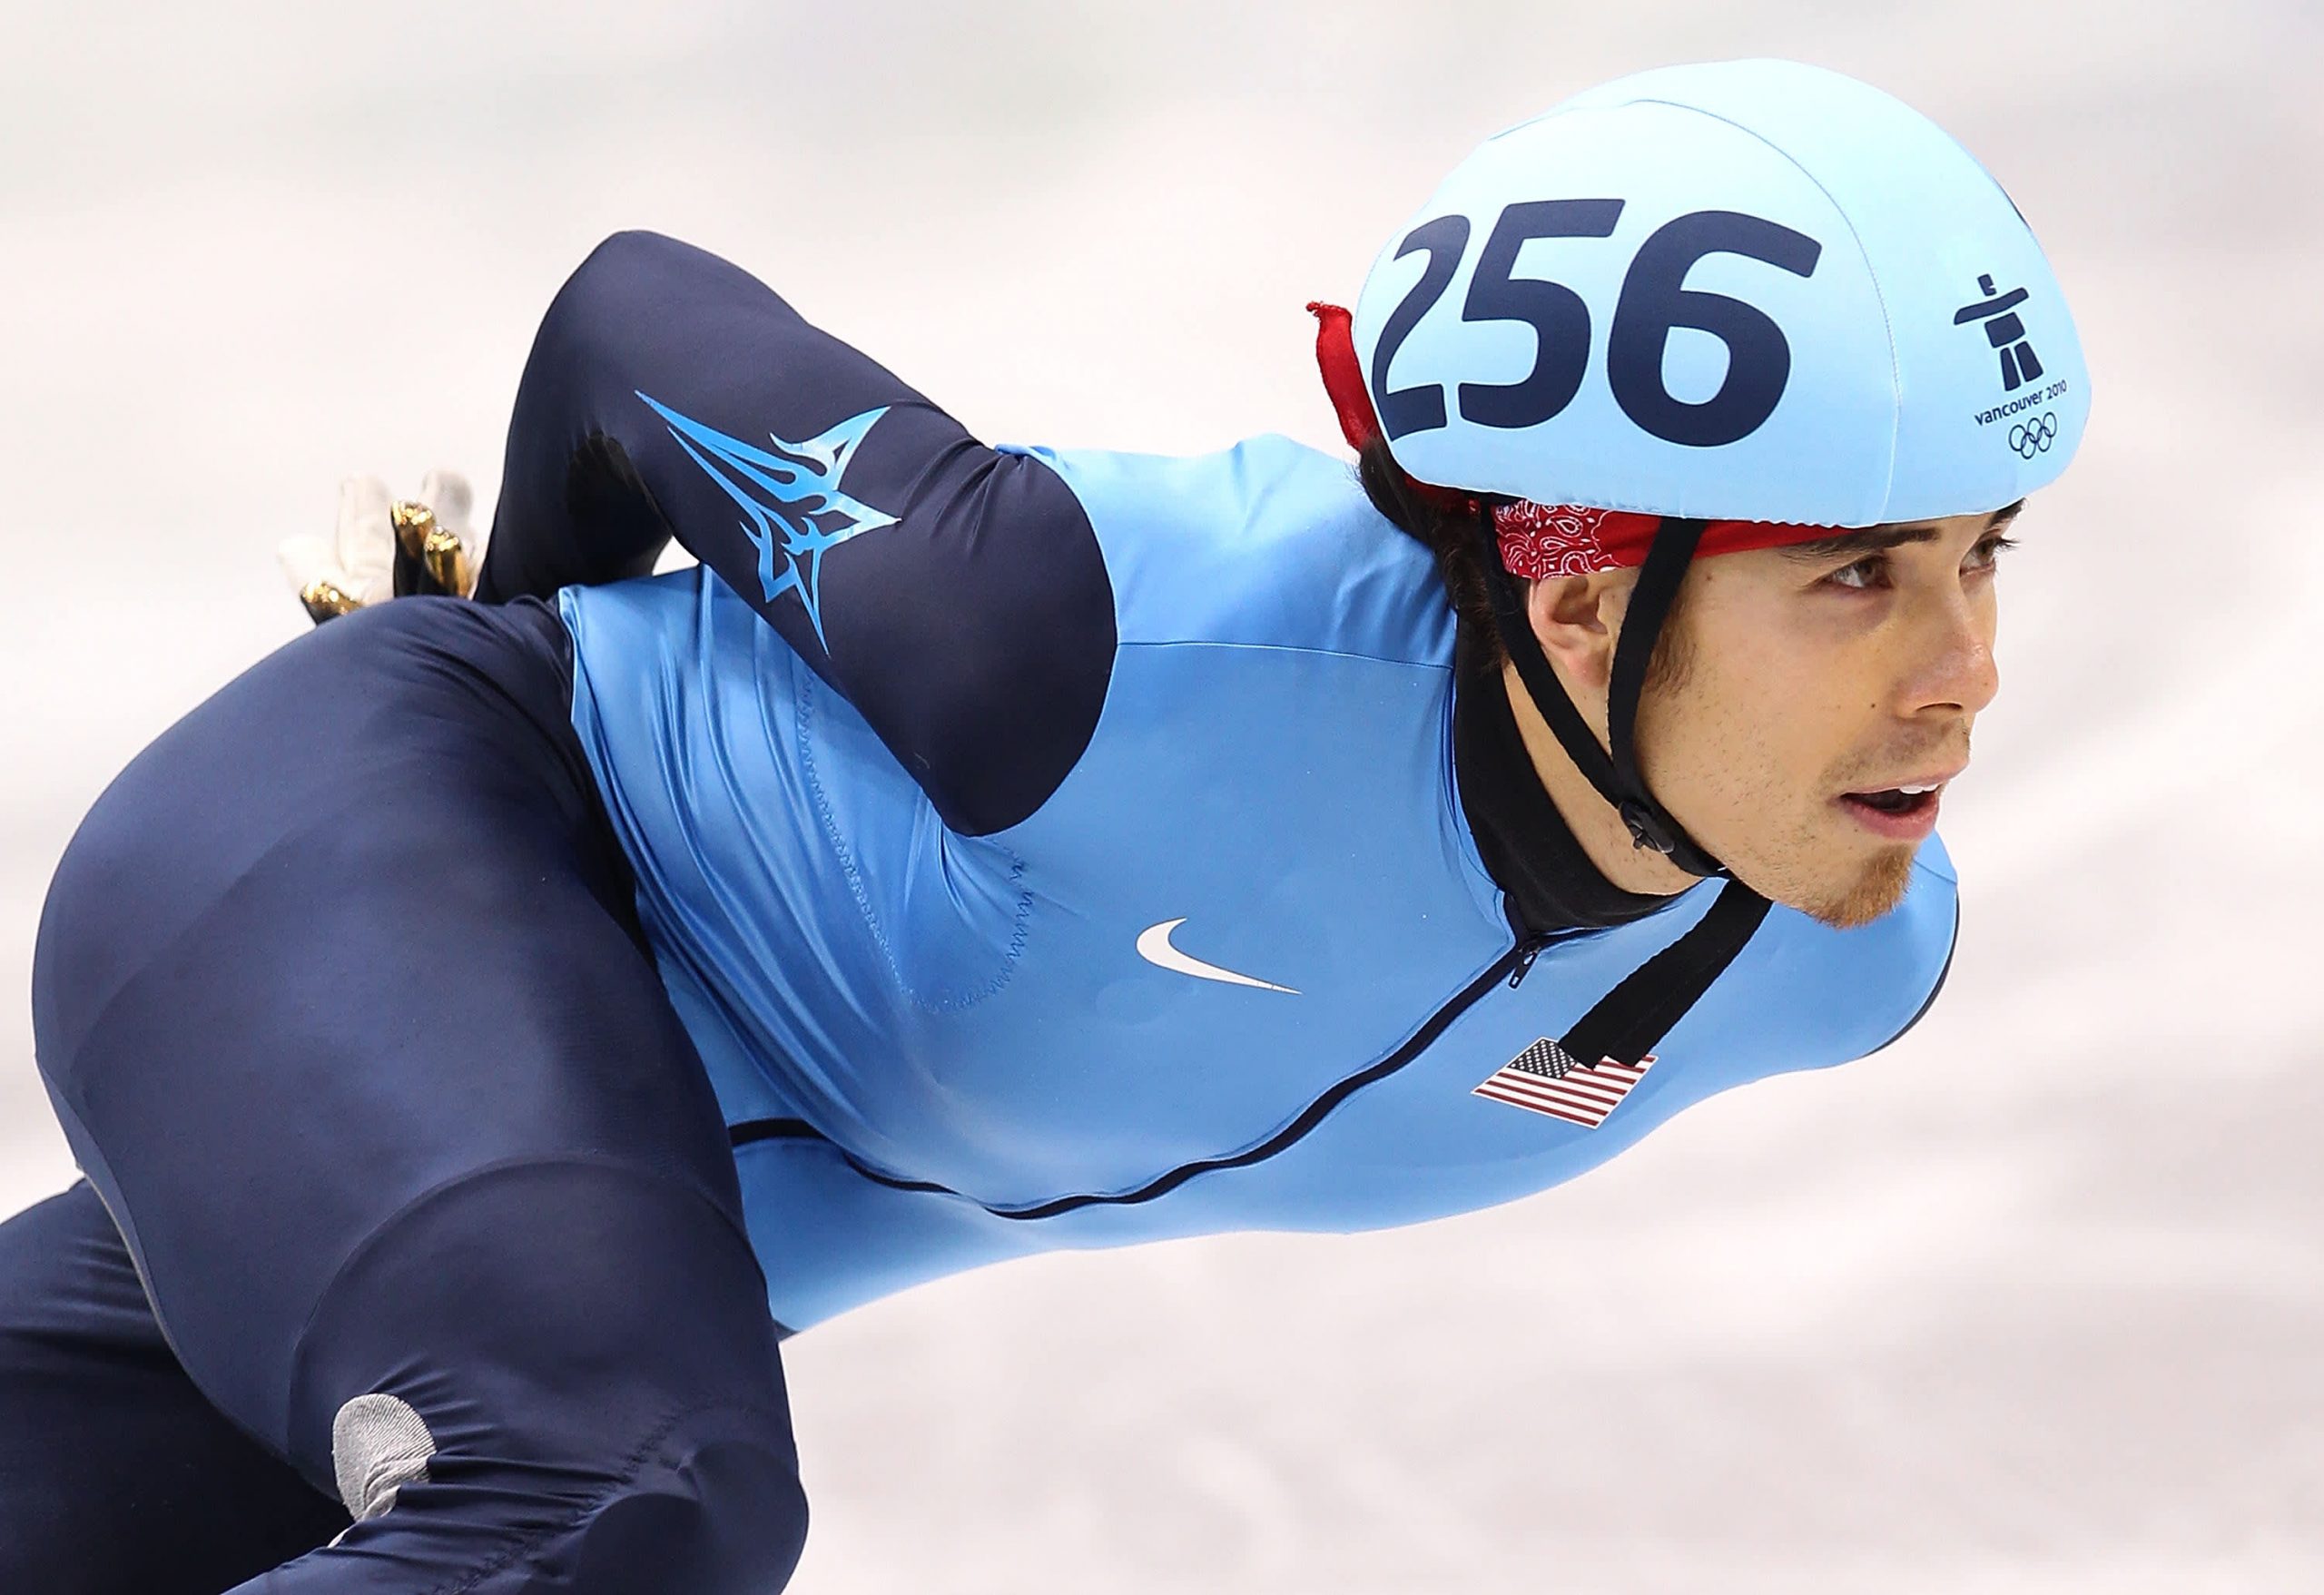 Olympic speed skater Apolo Ohno’s career pivots amid Great Resignation